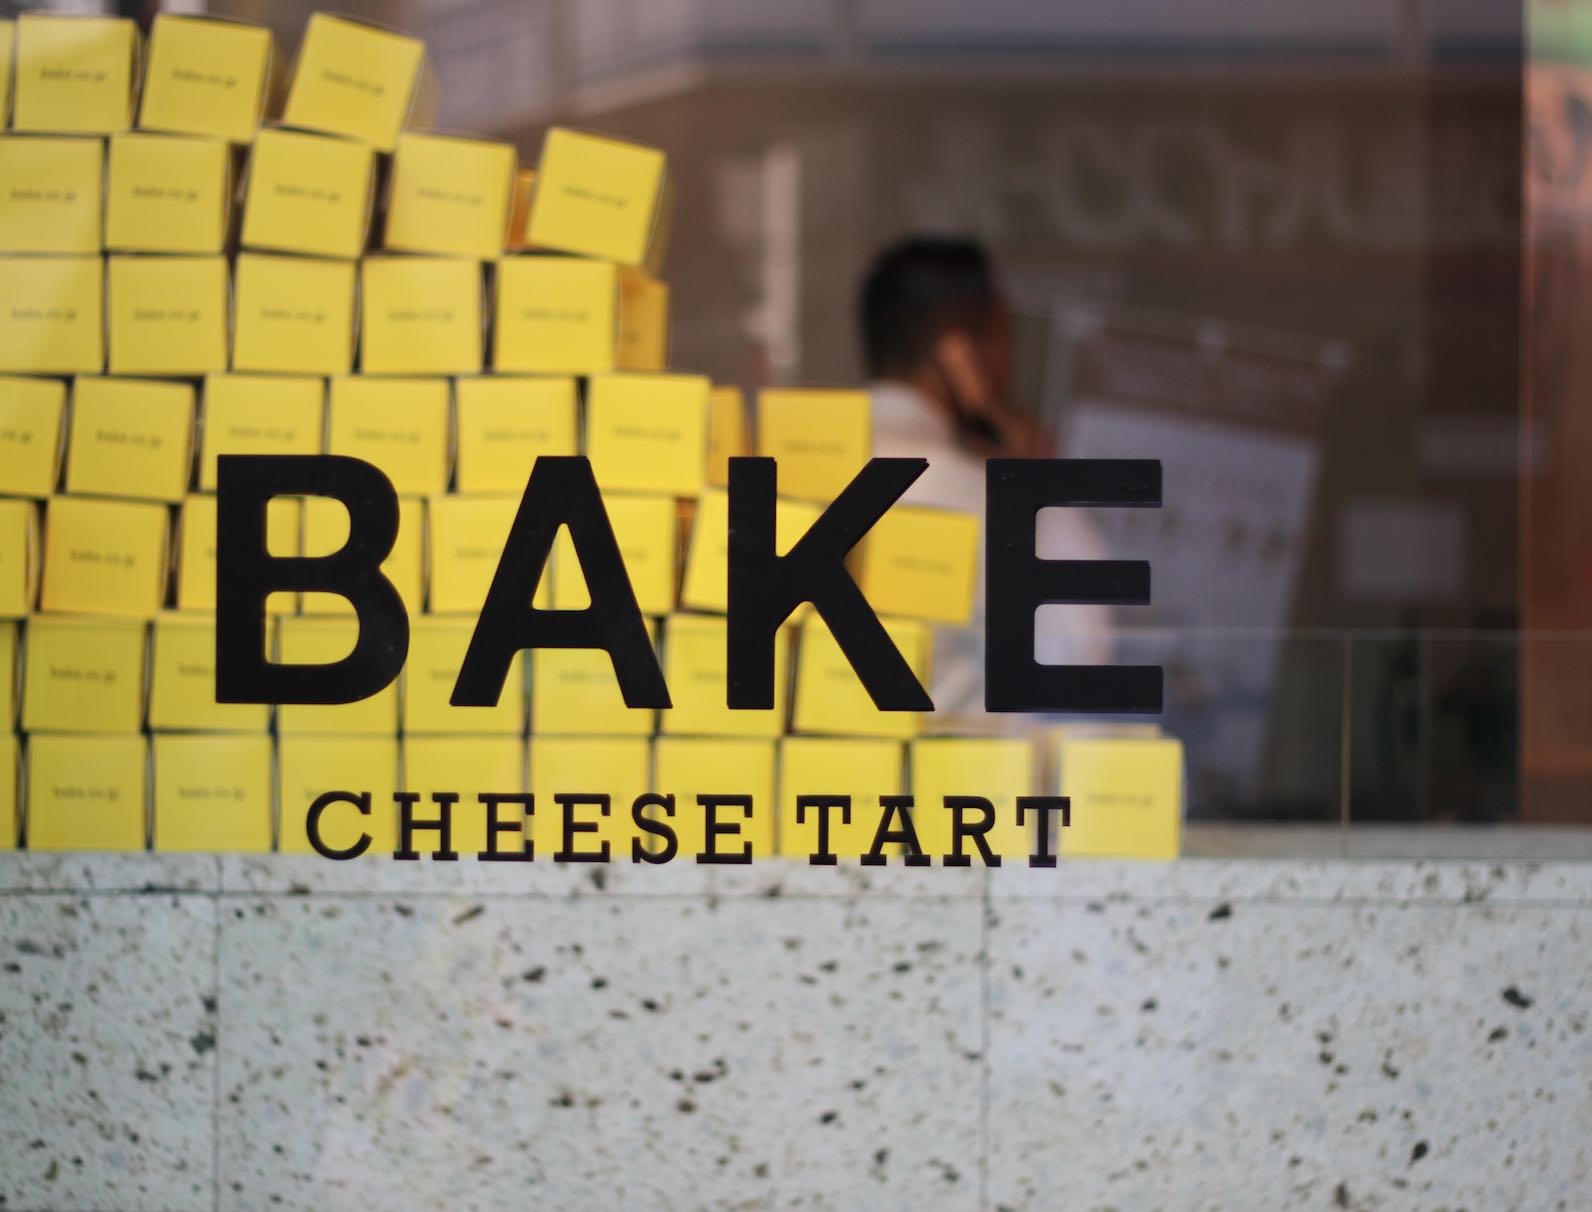 bake-cheese-tart-westgate-store-aspirantsg